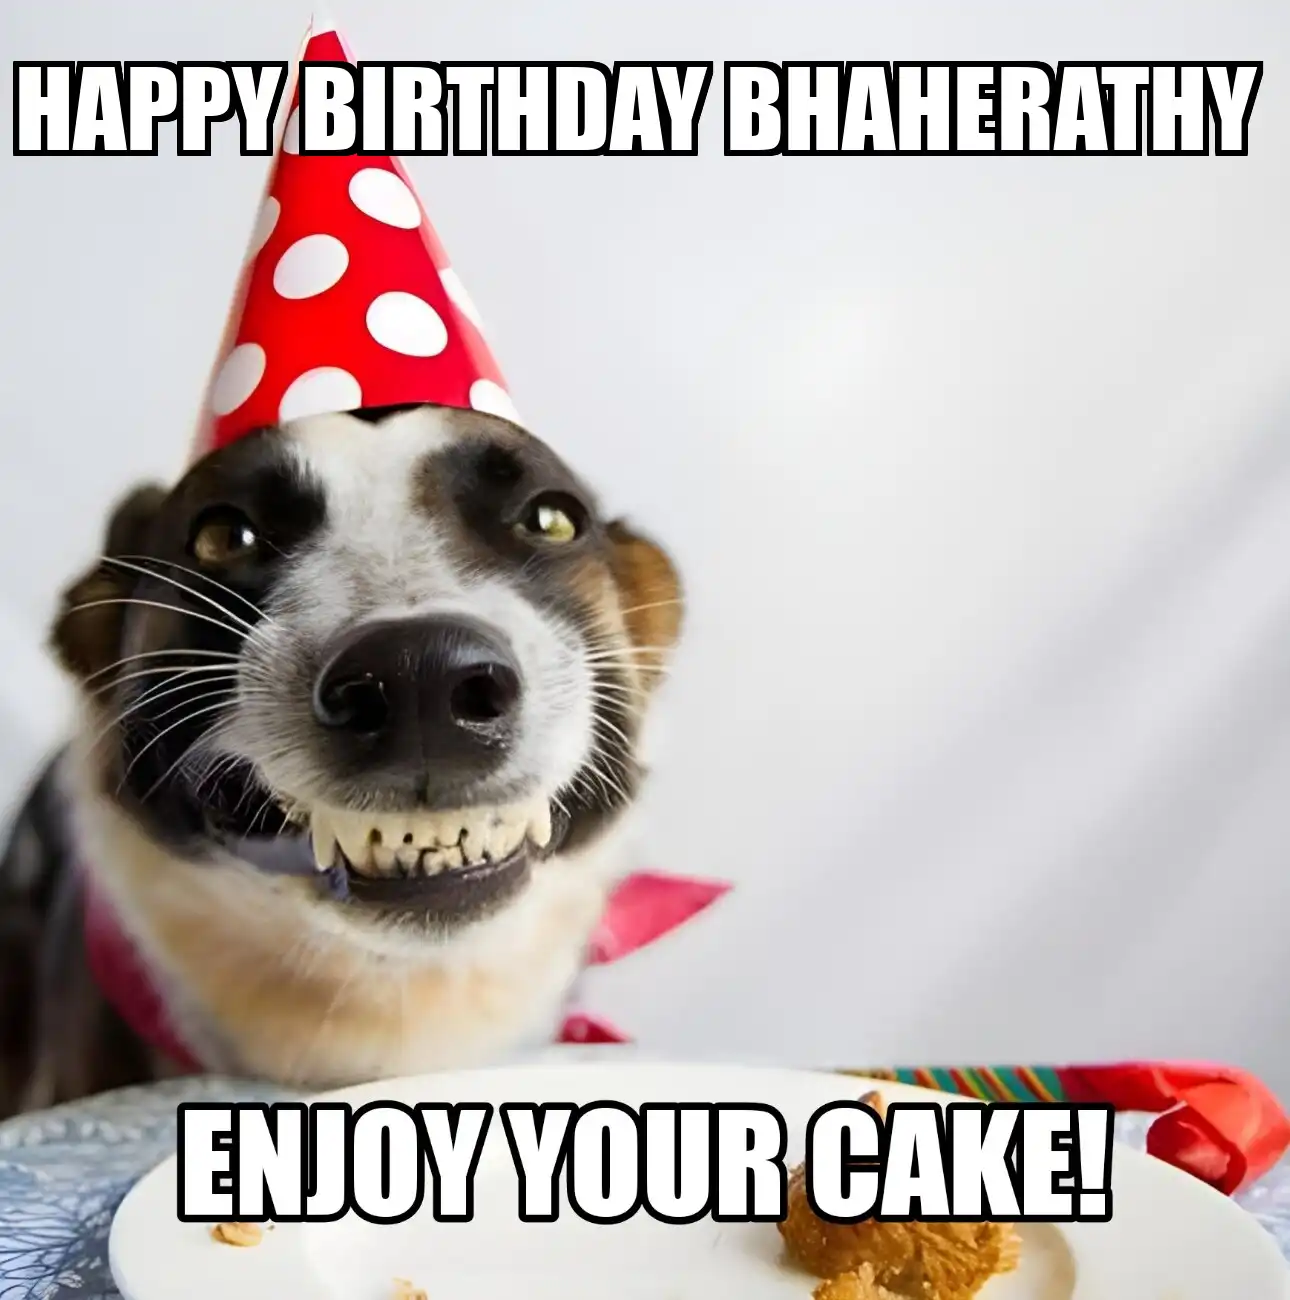 Happy Birthday Bhaherathy Enjoy Your Cake Dog Meme